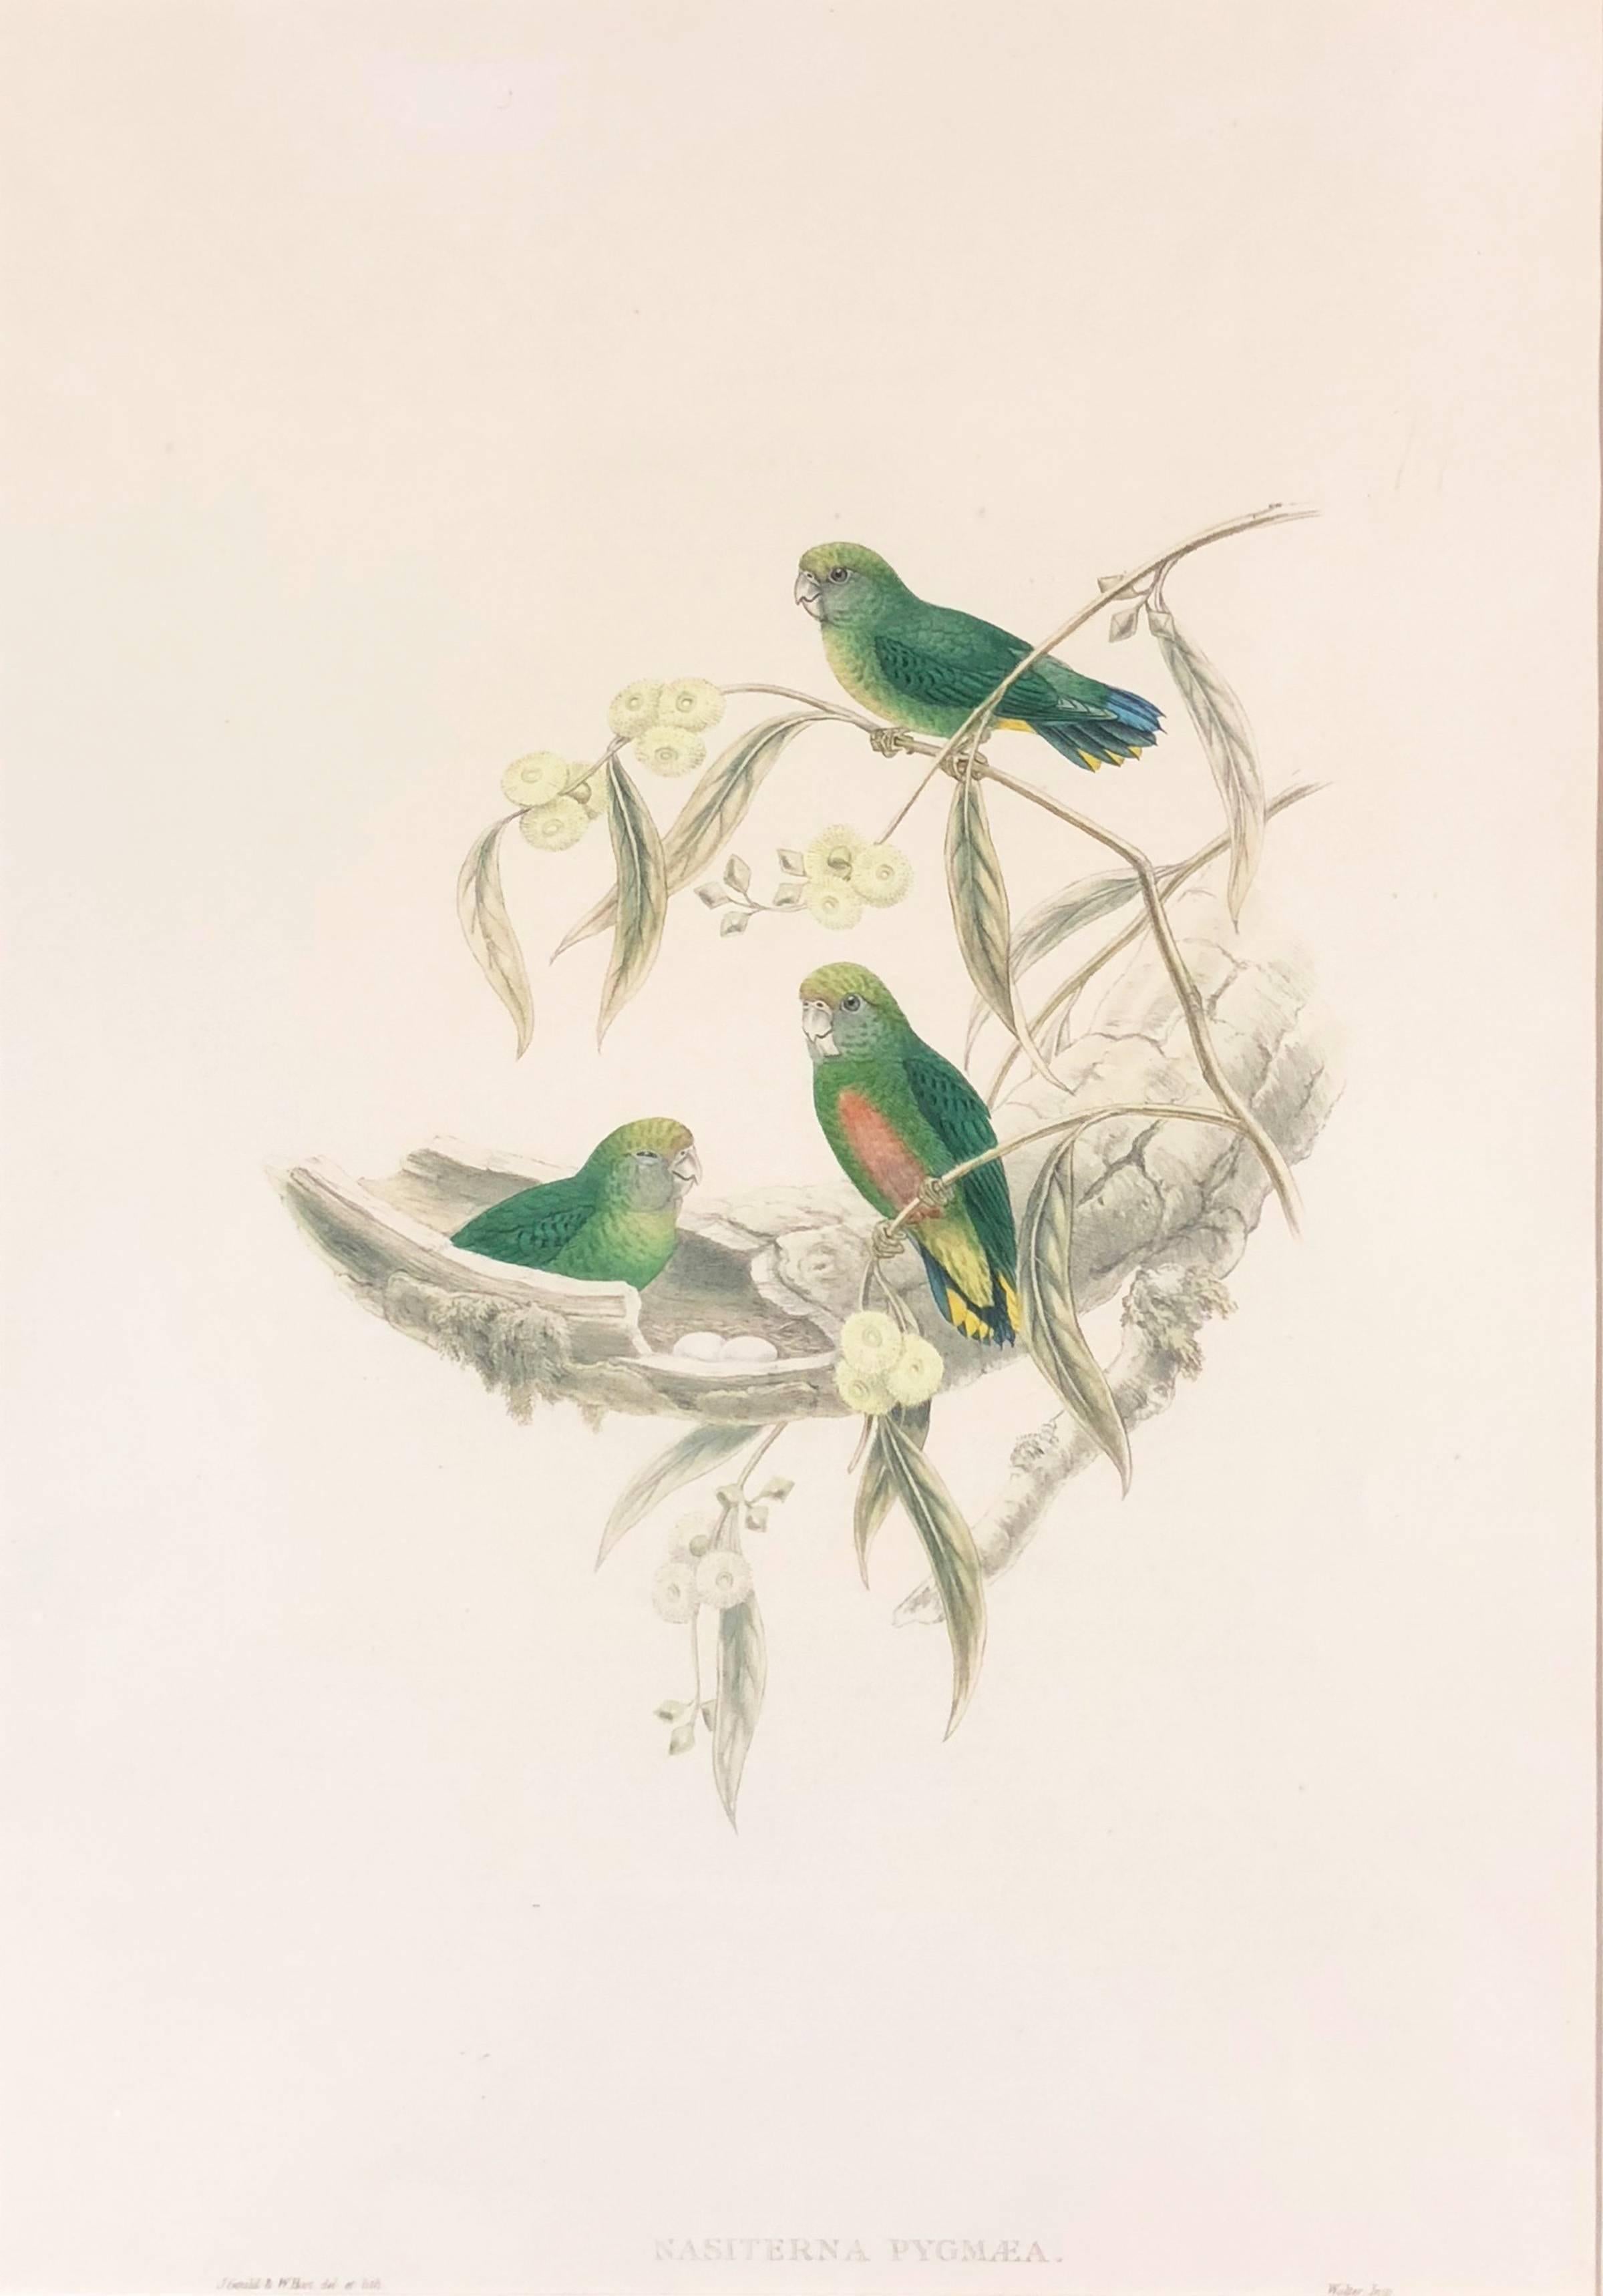 Animal Print John Gould - Nasiterna Pygmae